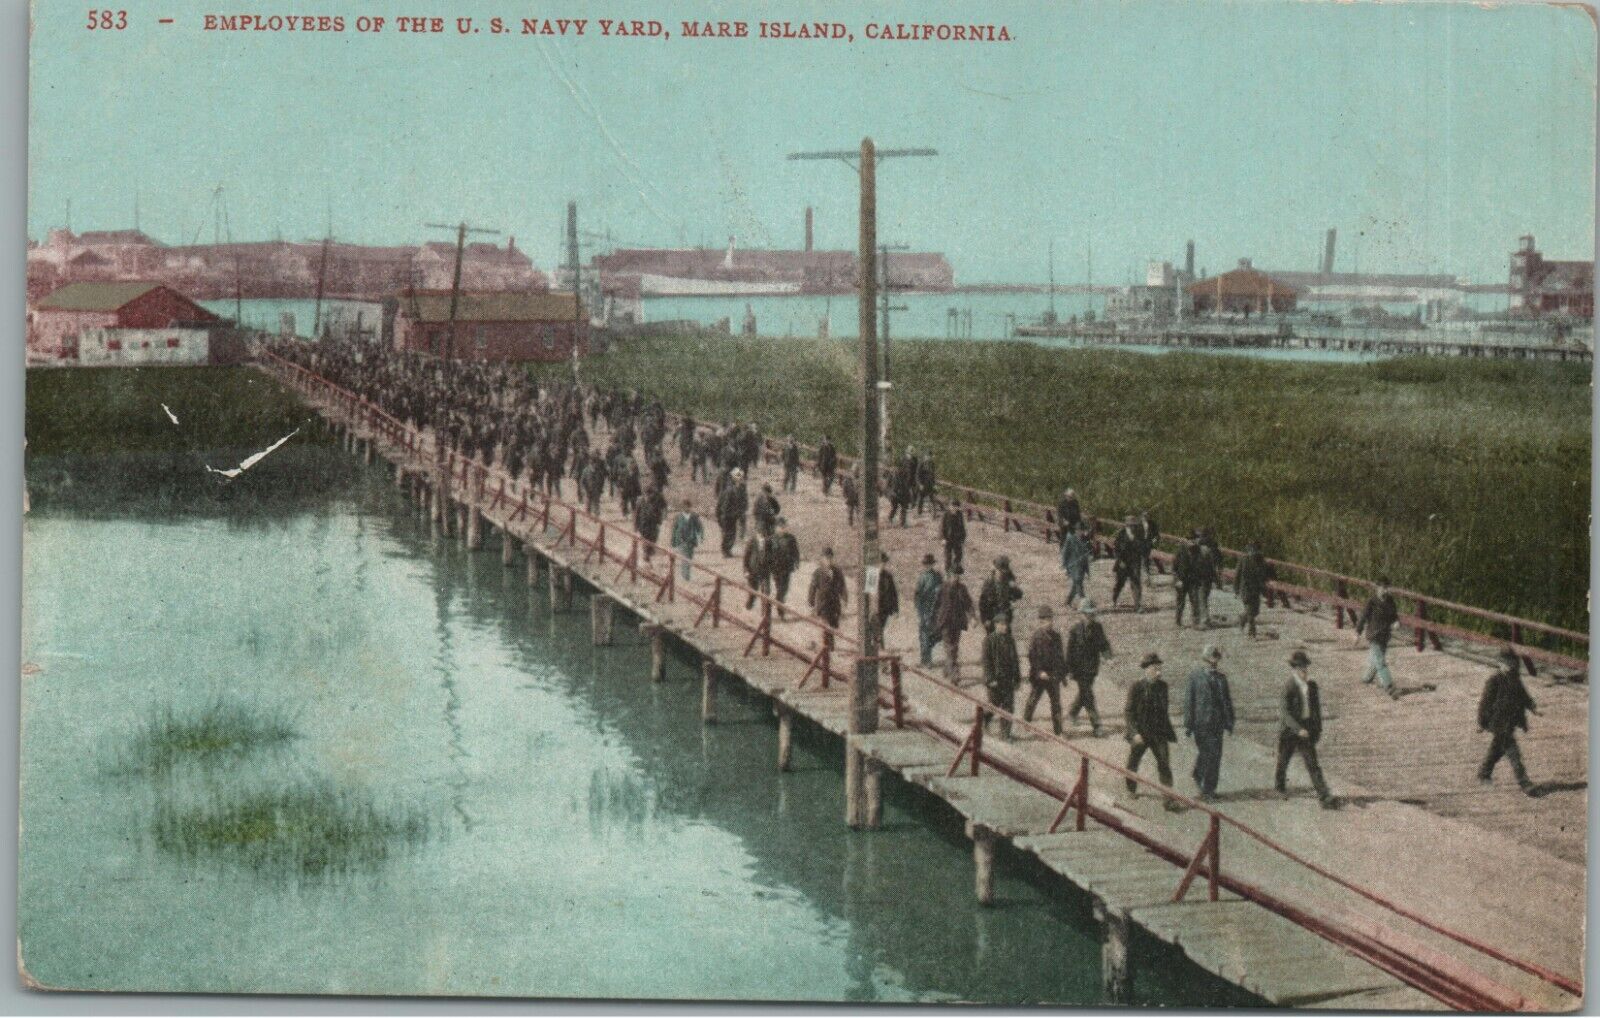 Mare Island California Employees Of The U.S. Navy Yard Vintage 1908 Postcard